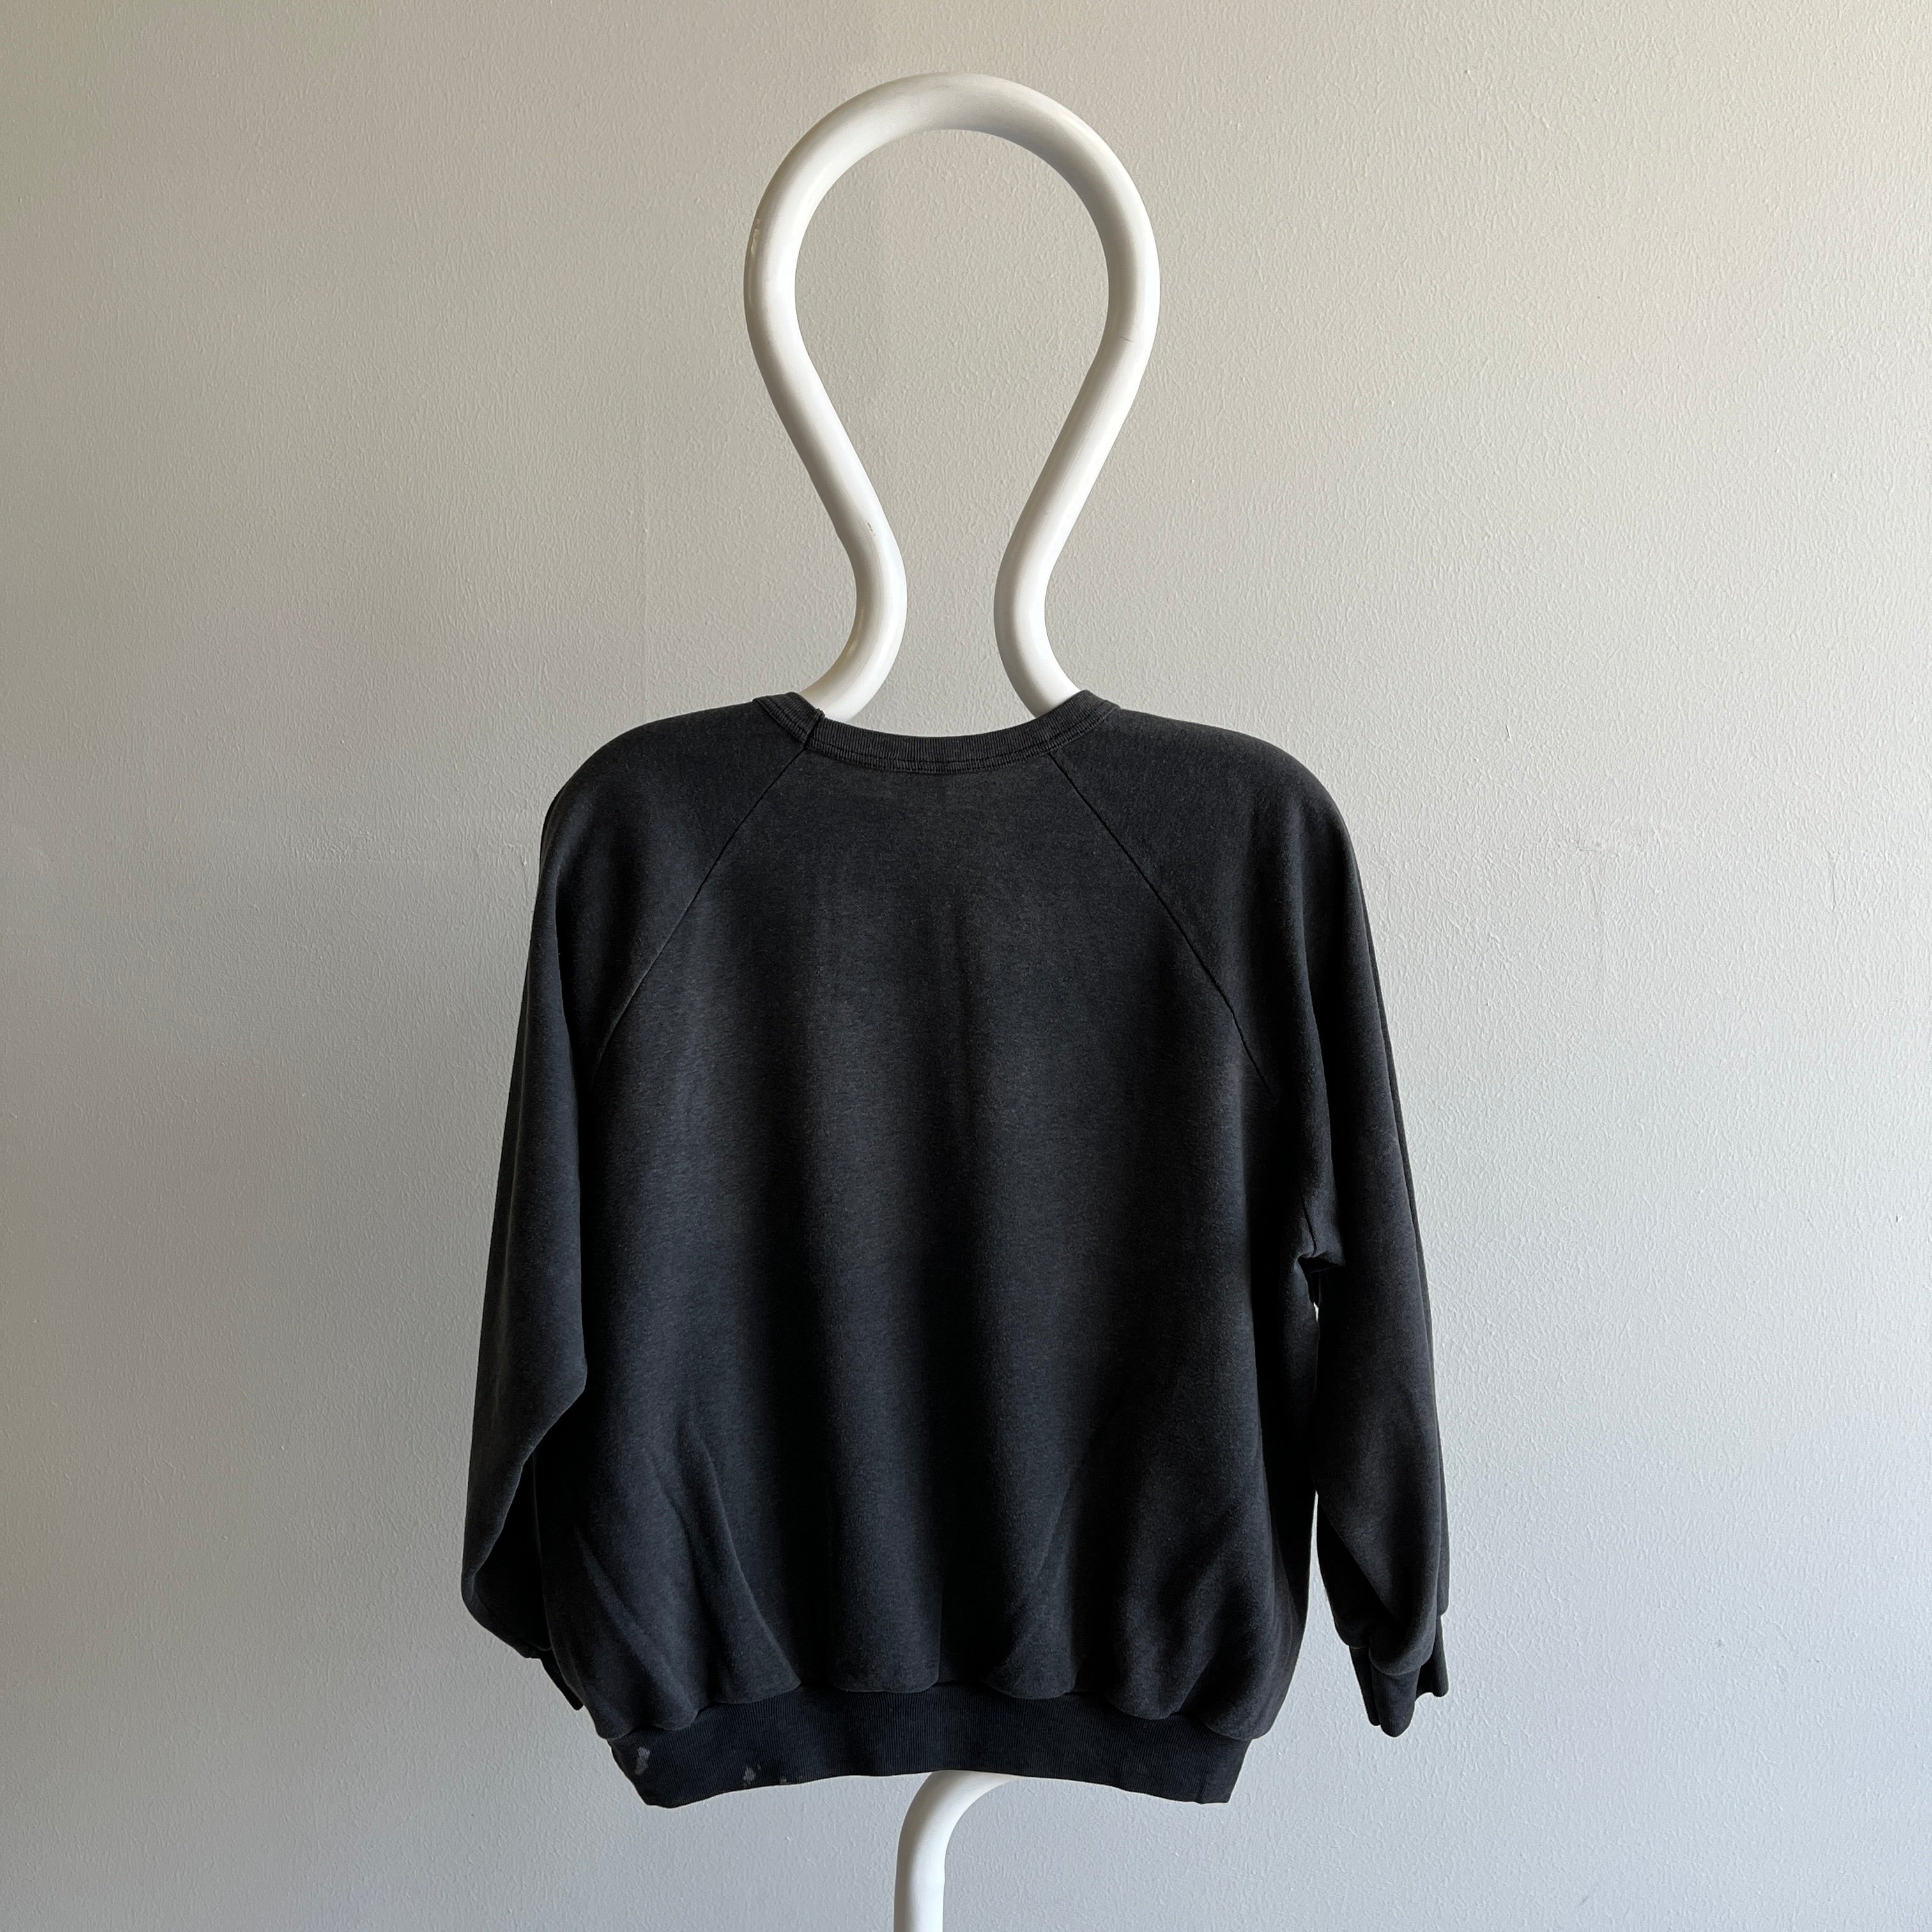 1990s Faded and Bleach Stained Super Lightweight Dark Gray/Black Sweatshirt/Long Sleeve Shirt